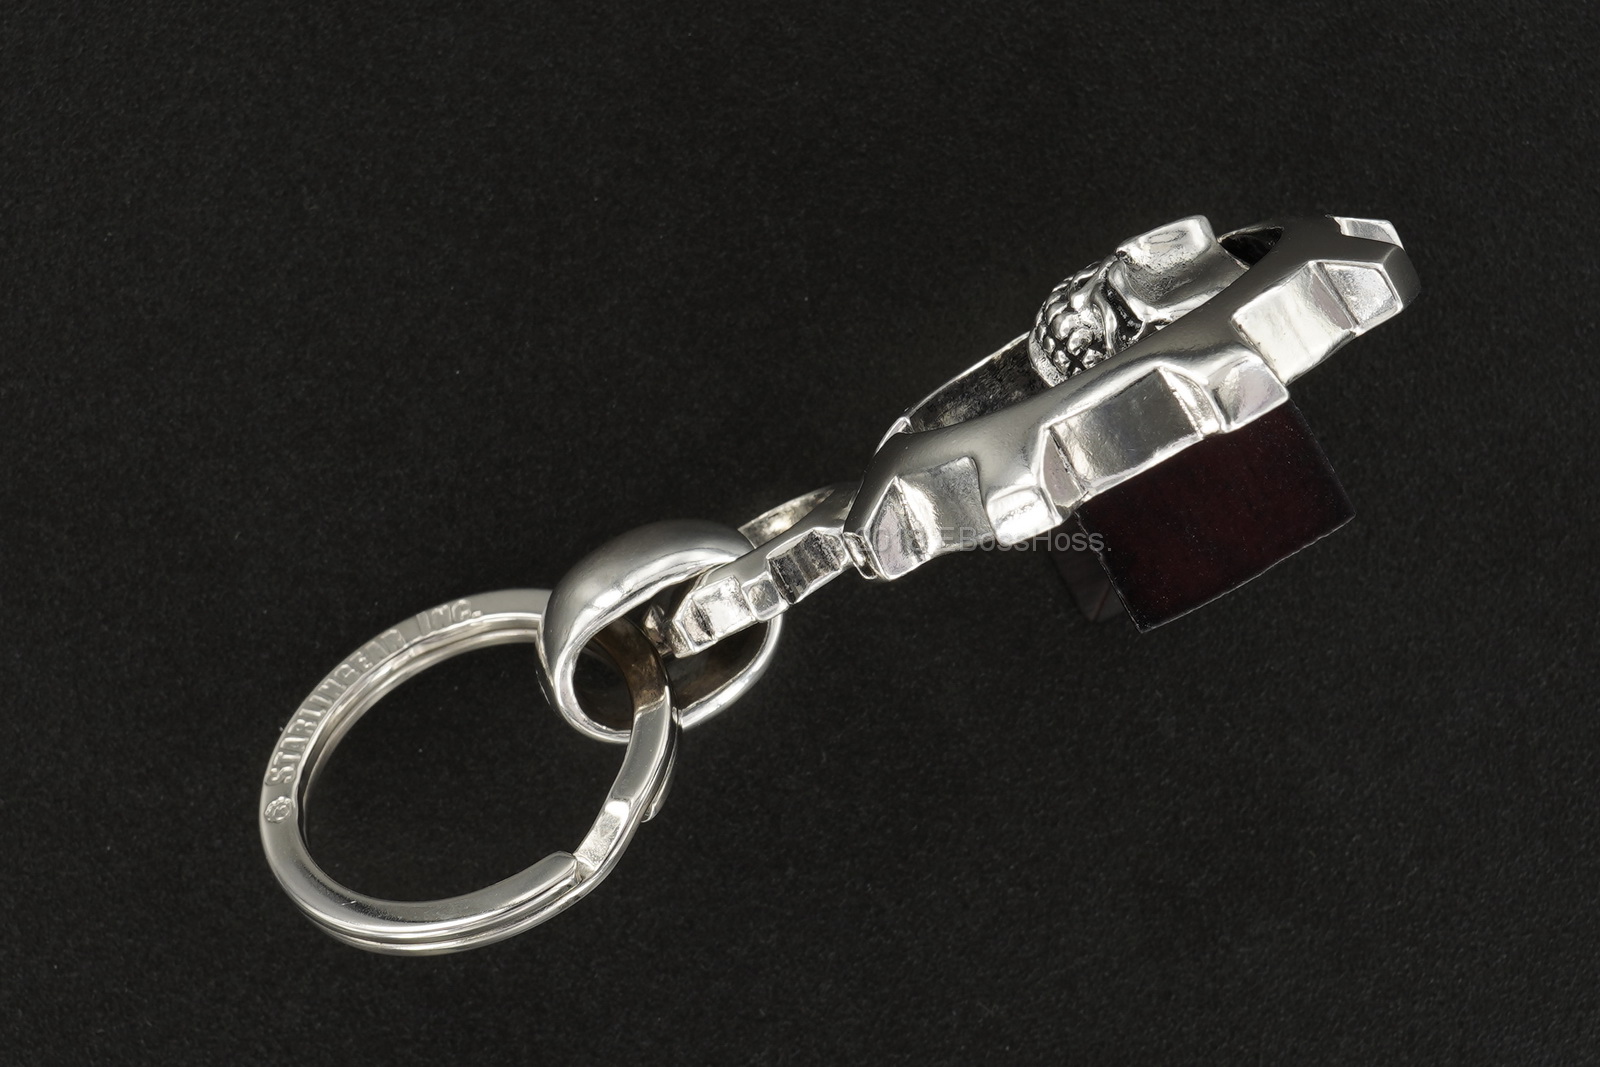  Starlingear Custom Sterling-Silver Slickster-Gear Keeper Key Chain